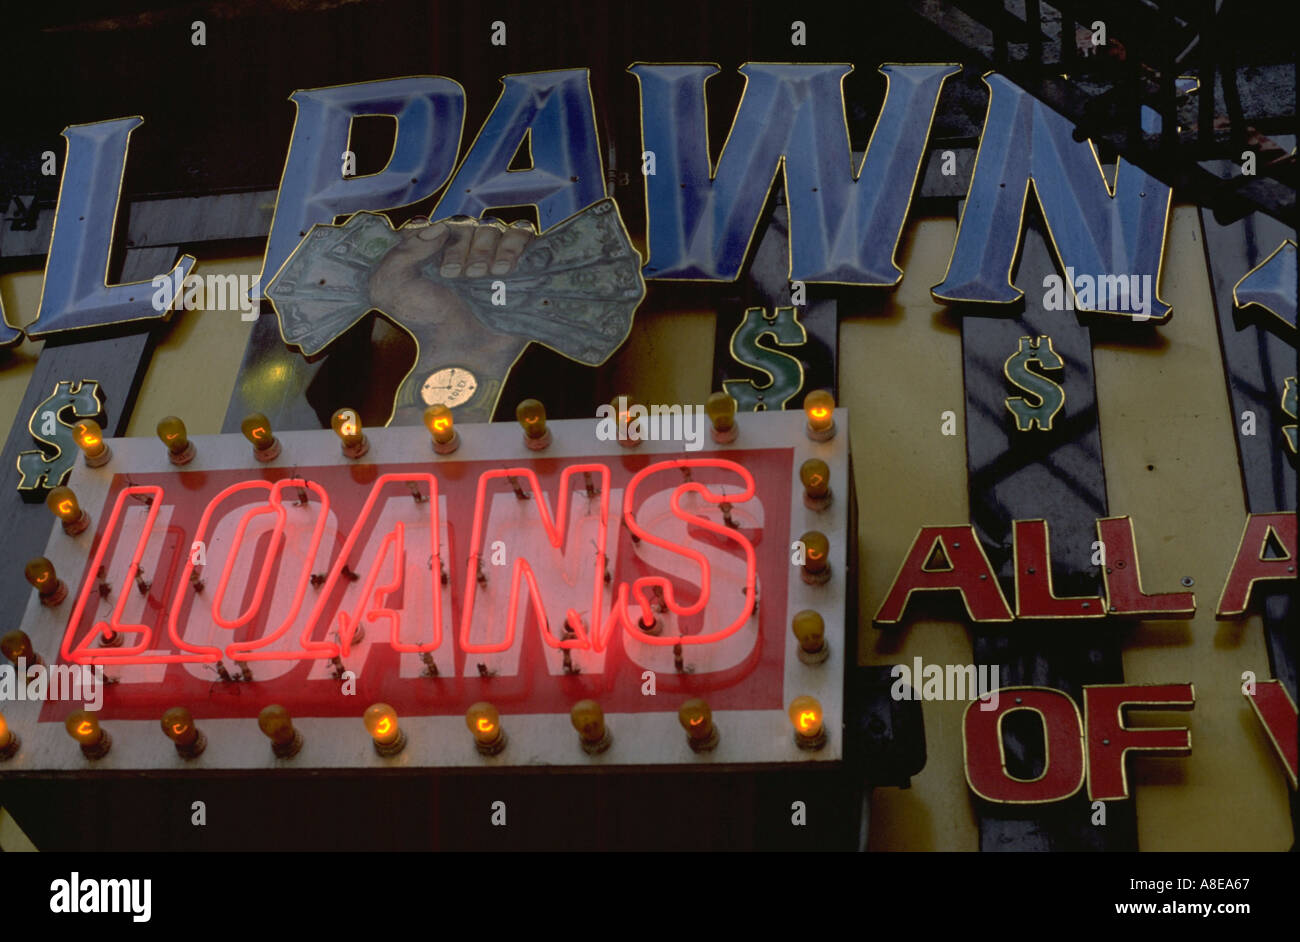 Pawn shop's neon sign glowing last chance desolation. Chicago Illinois USA Stock Photo